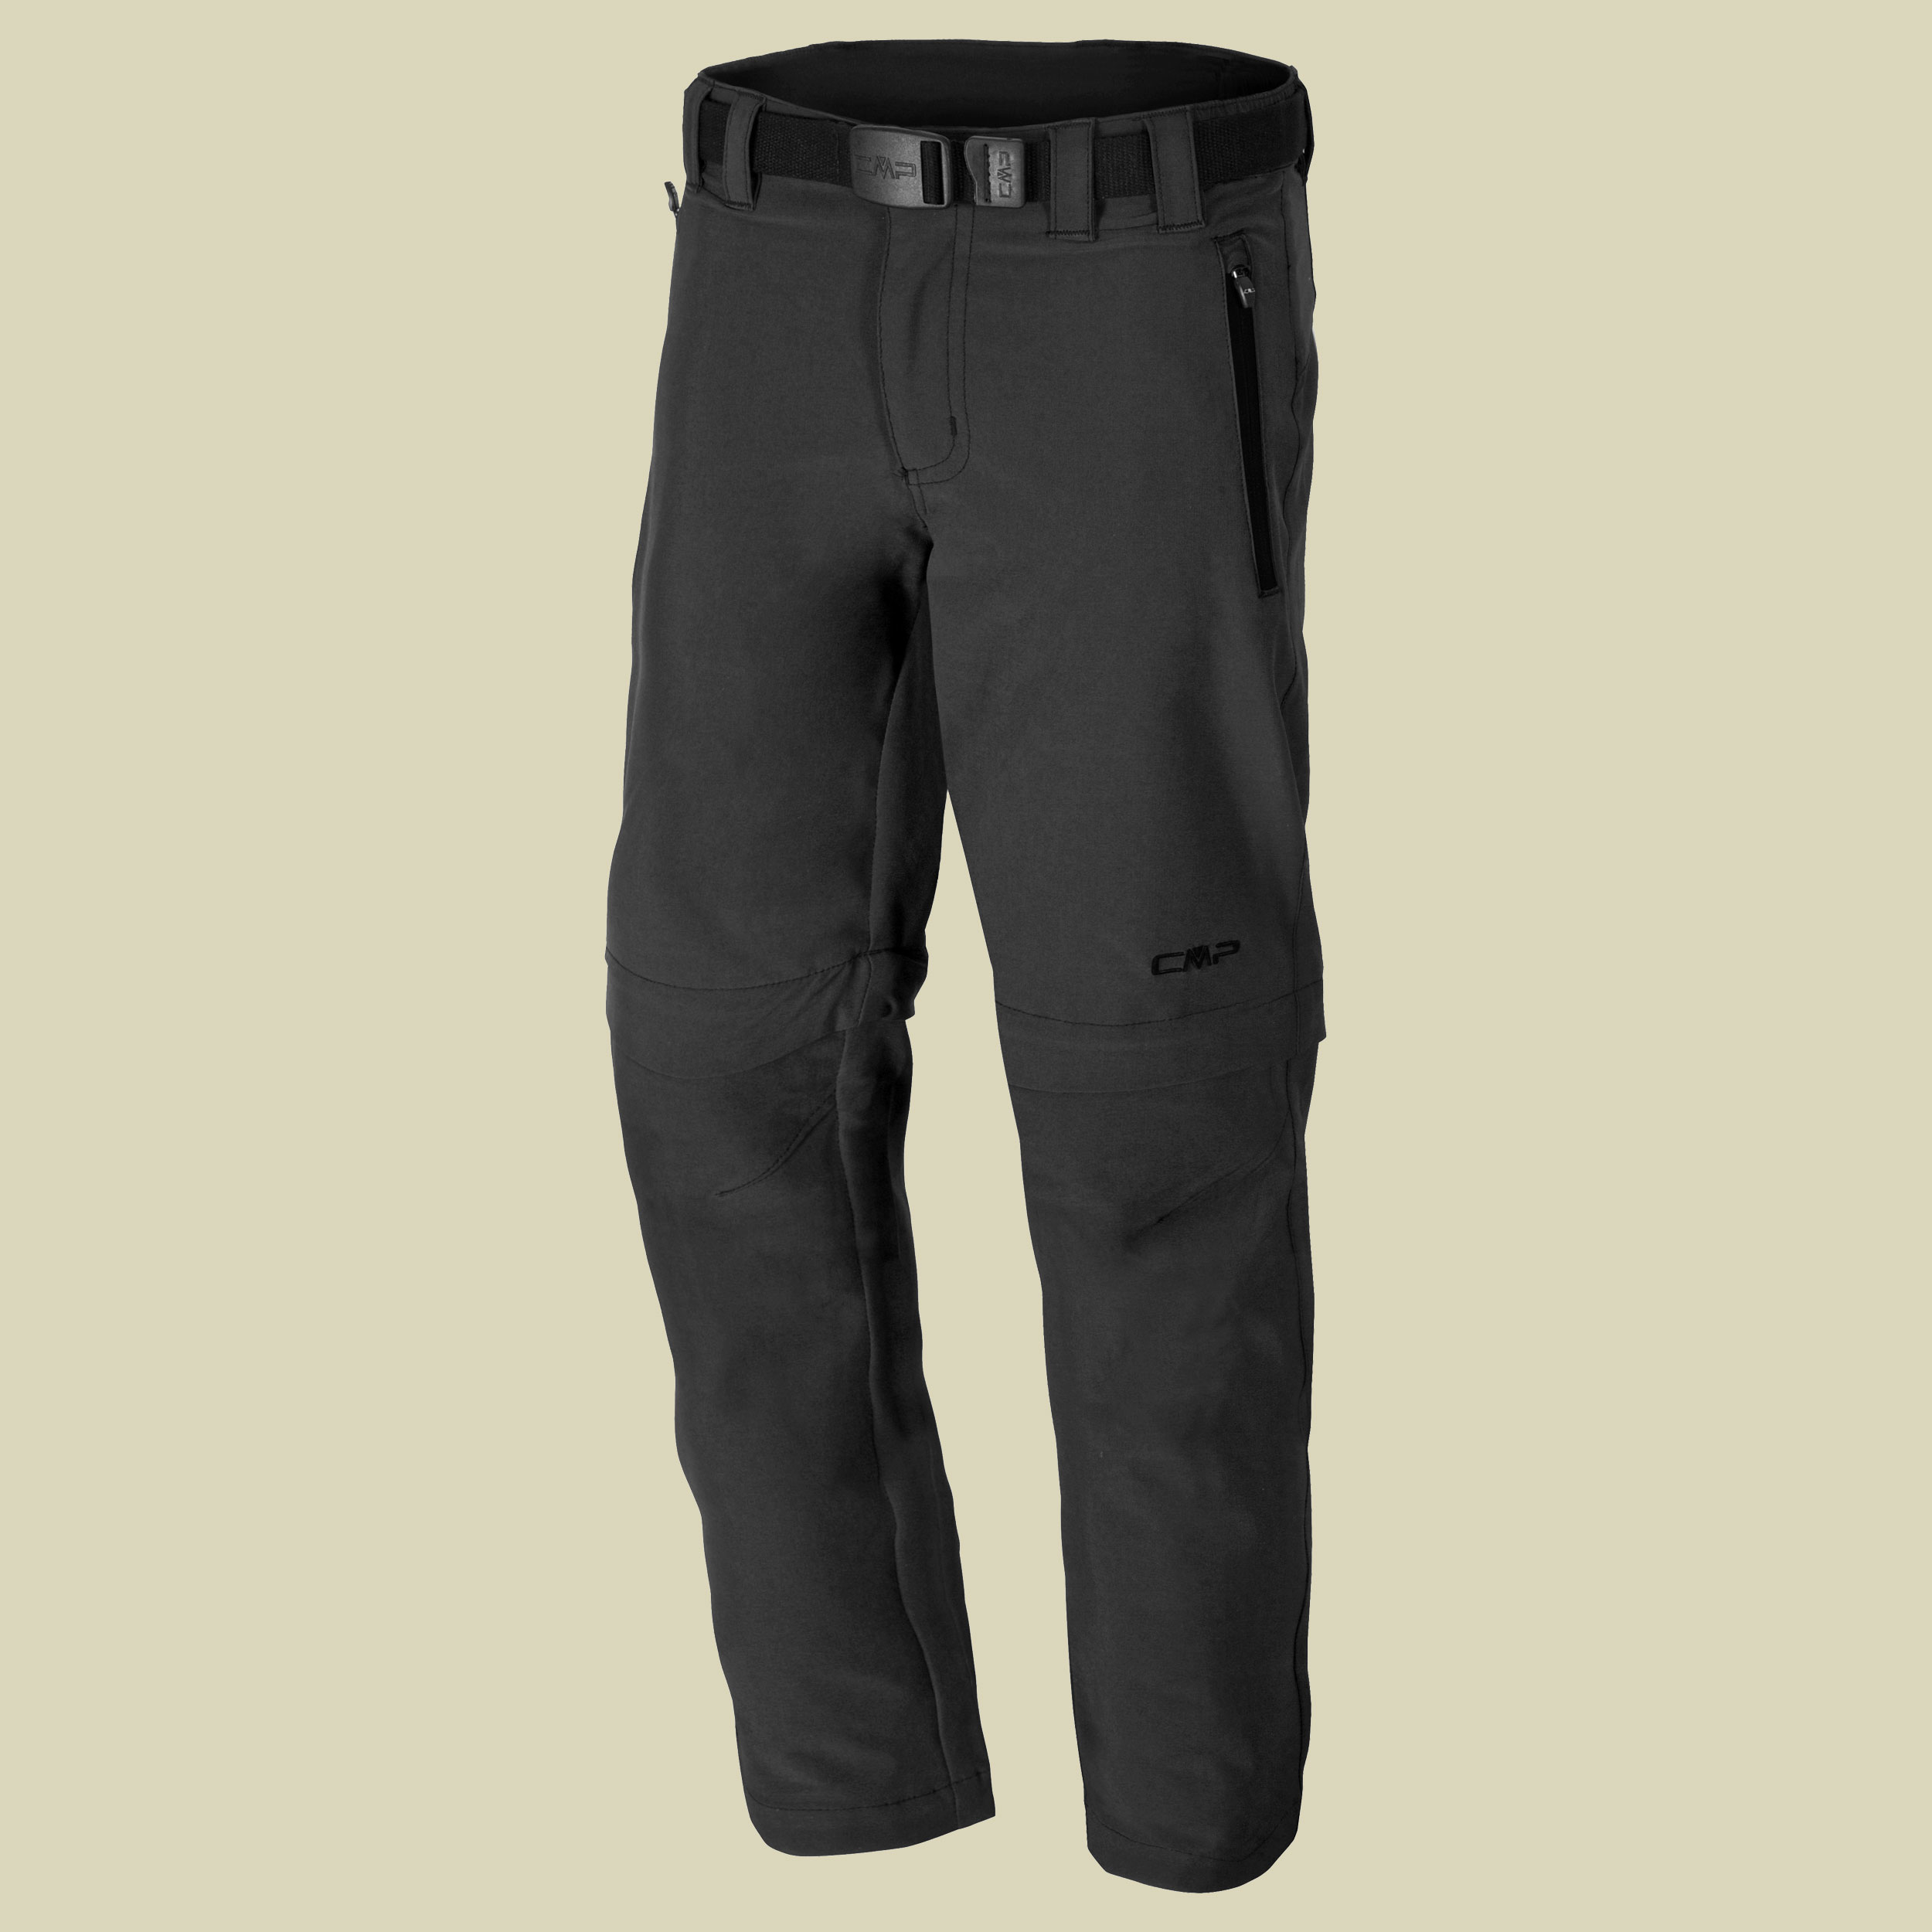 Man Long Pant Zip Off Stretch 3T51647 Größe 52 Farbe U423 antracite-nero